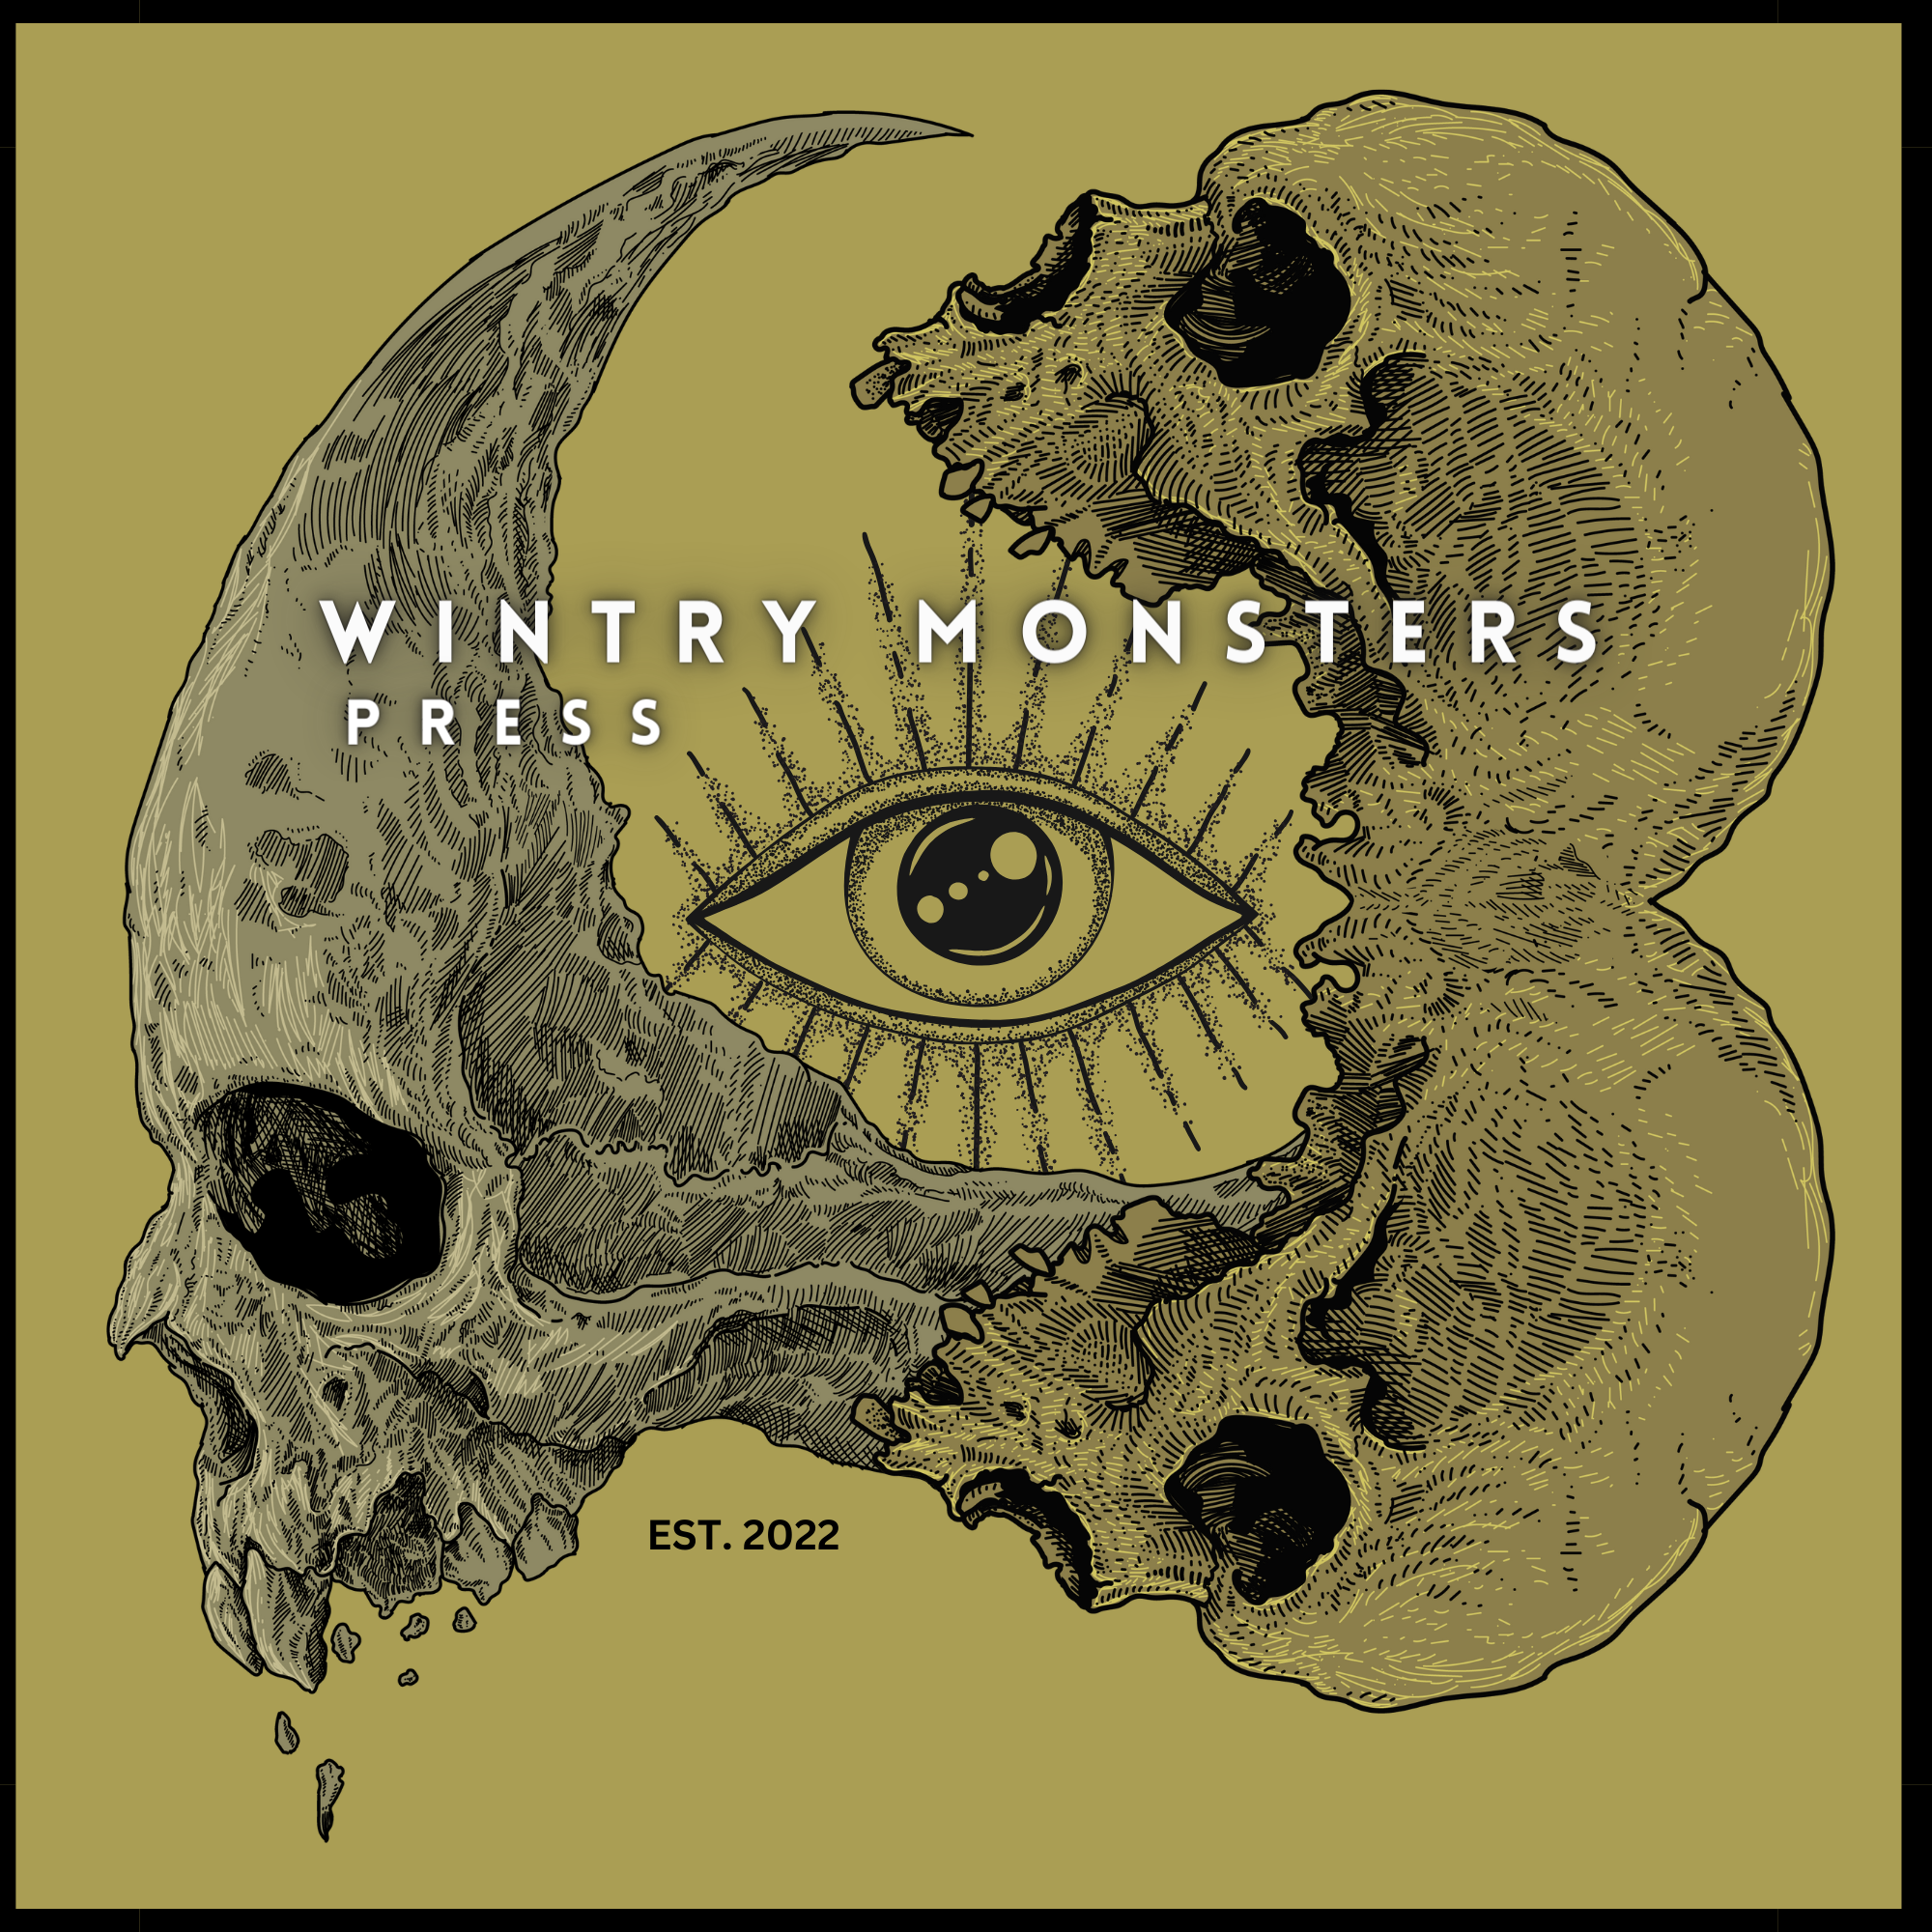 Wintry Monsters Press